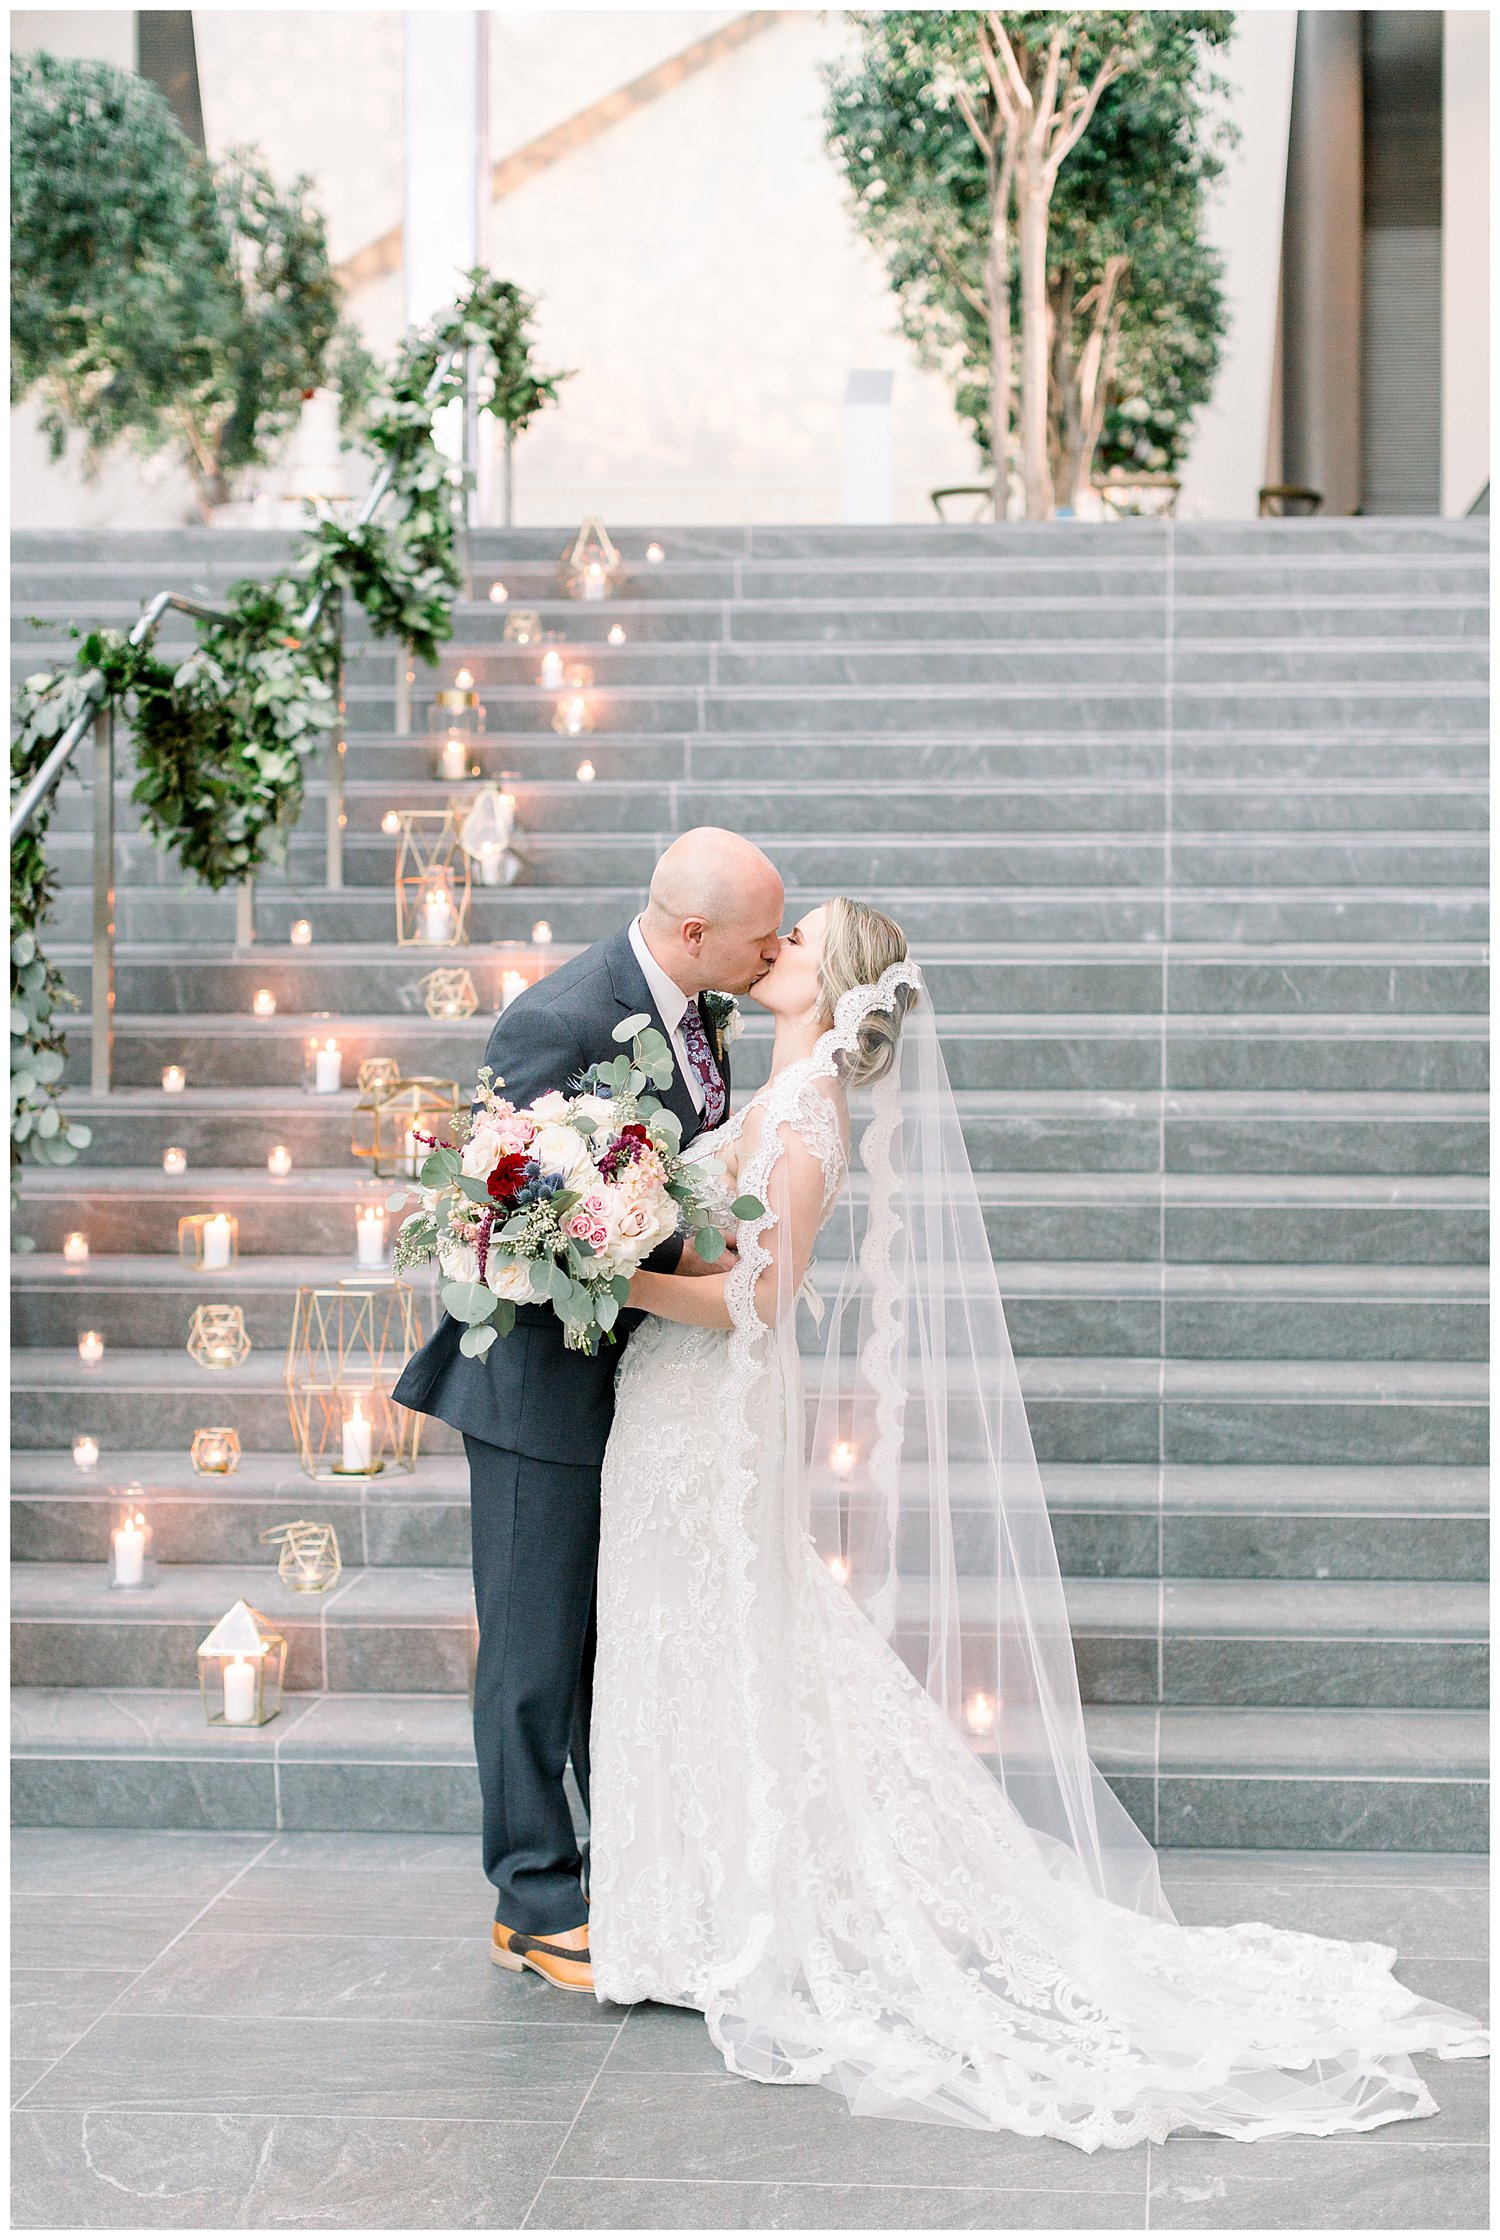 Romantic bride and groom photo at the Ritz Carlton Charlotte North Carolina wedding by photographer Samantha Laffoon Photography